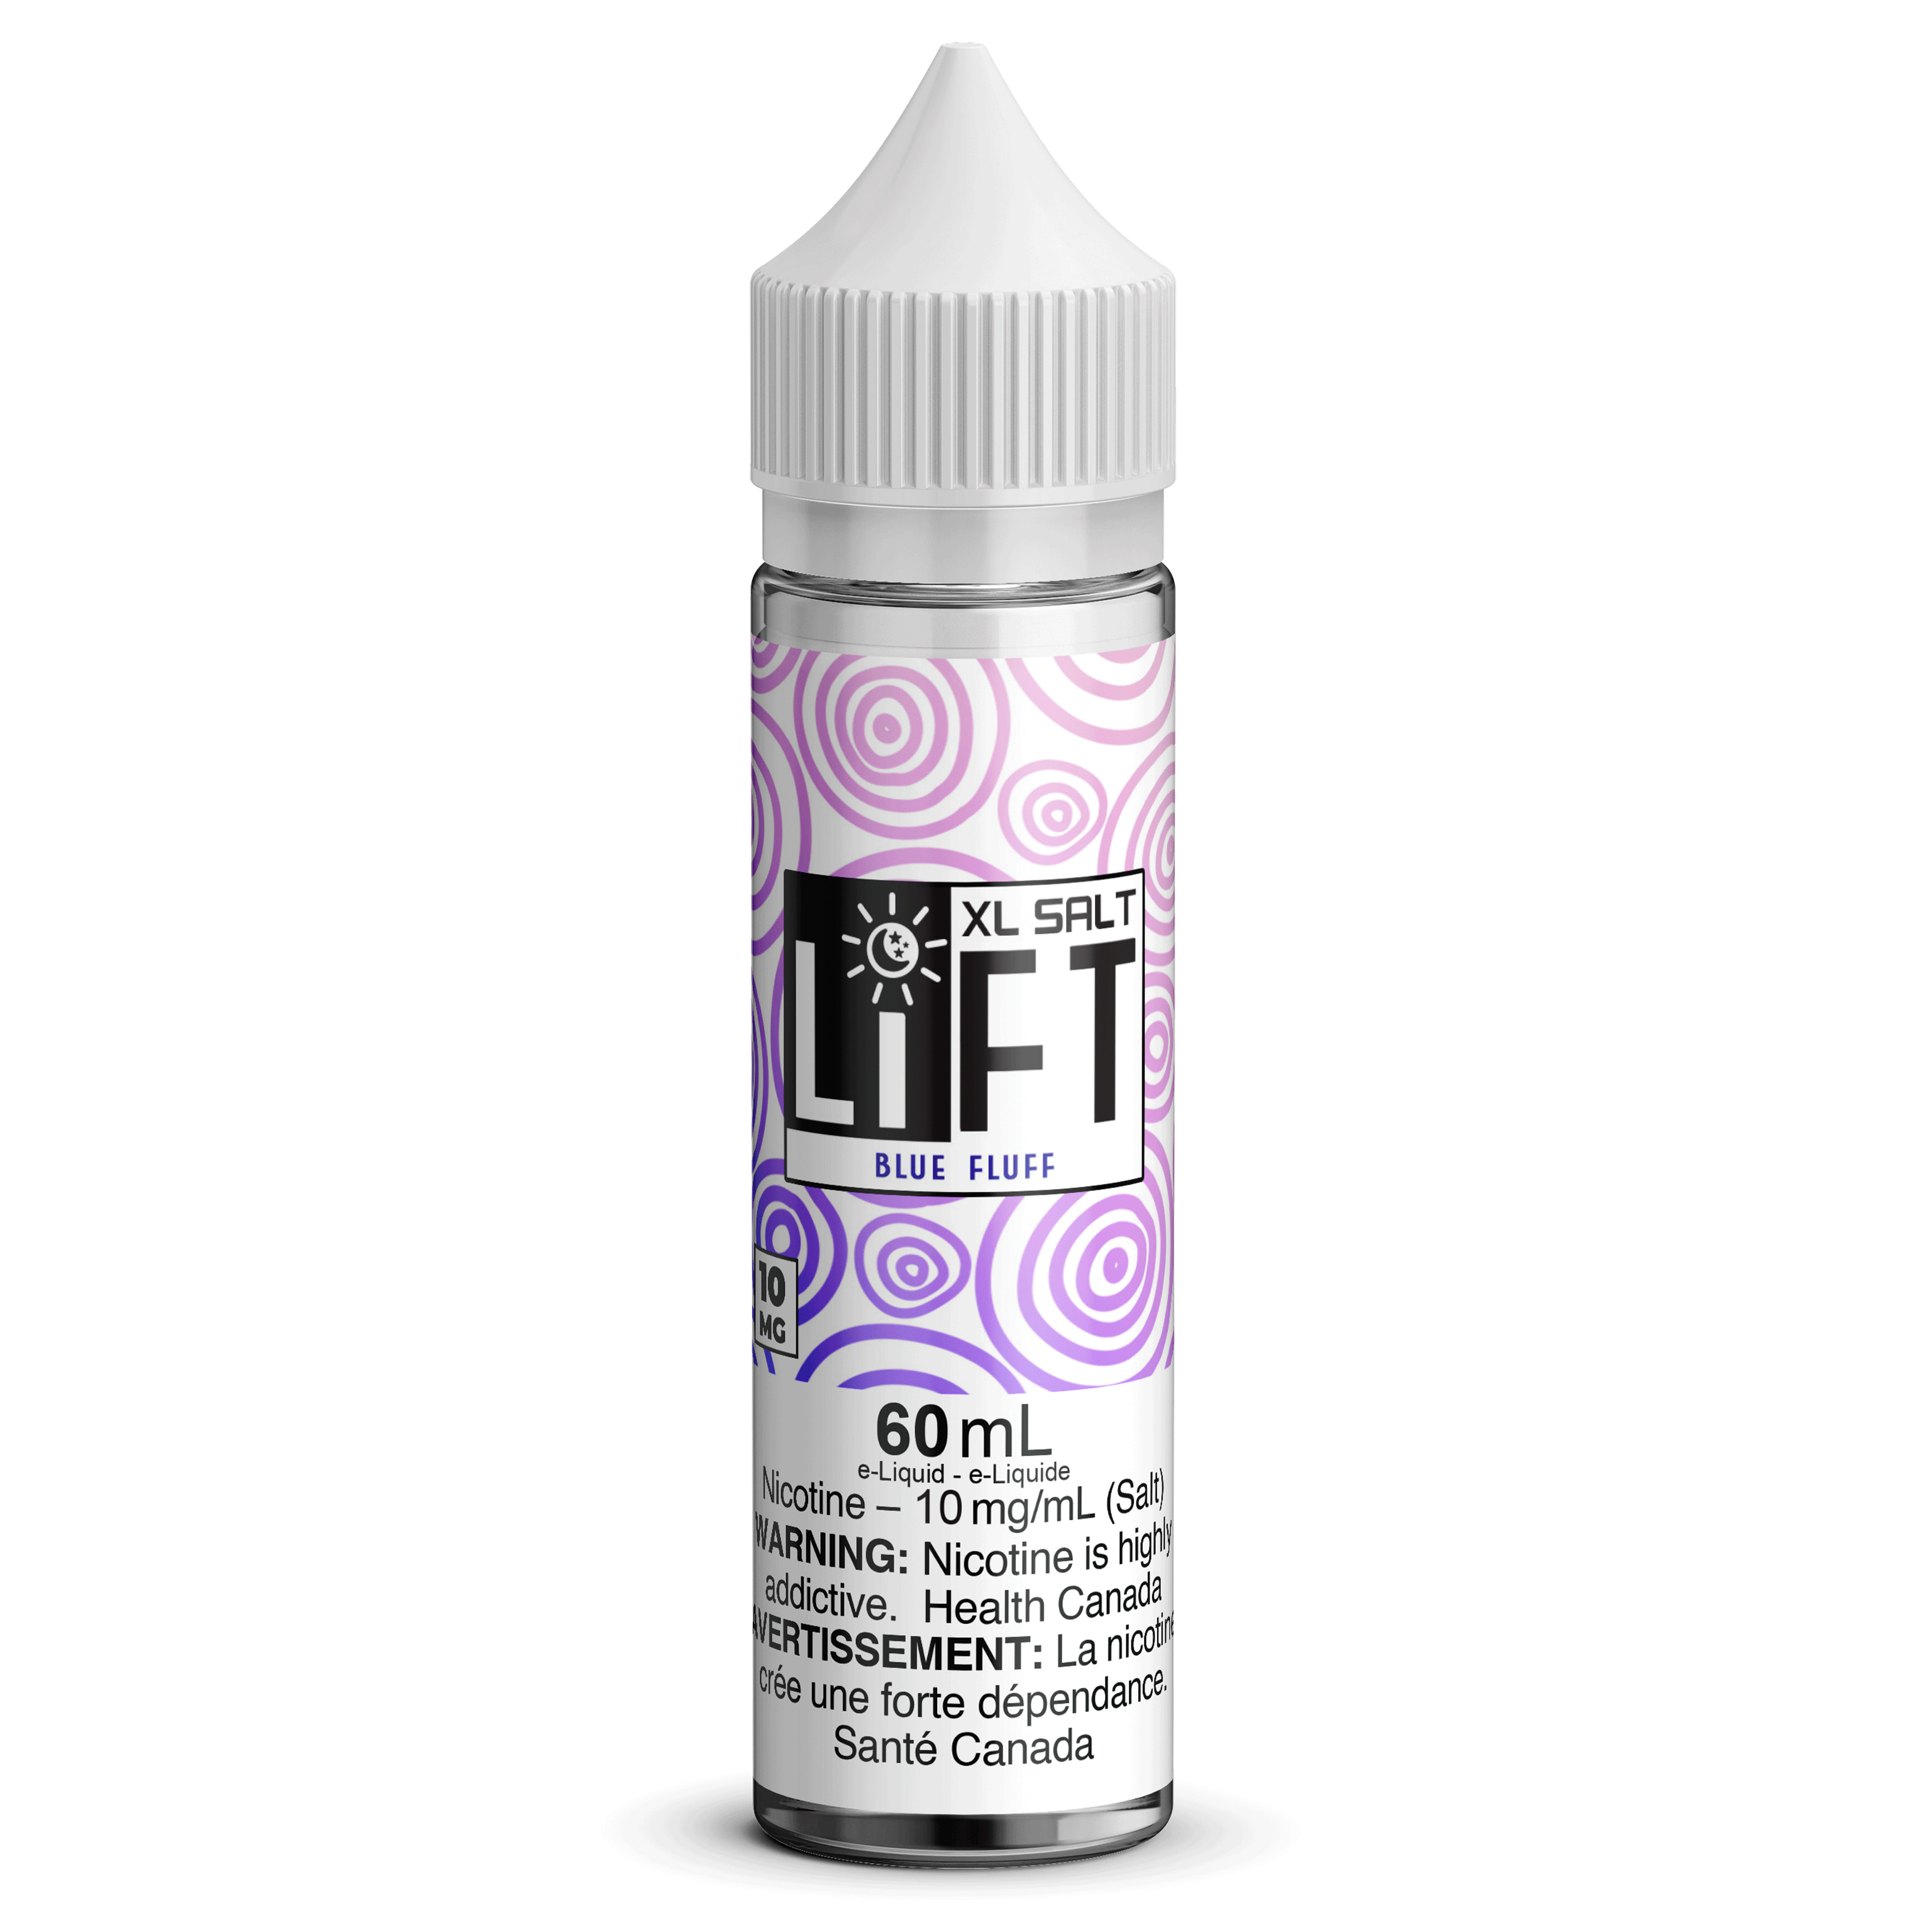 LIFT XL SALT - Blue Fluff available on Canada online vape shop